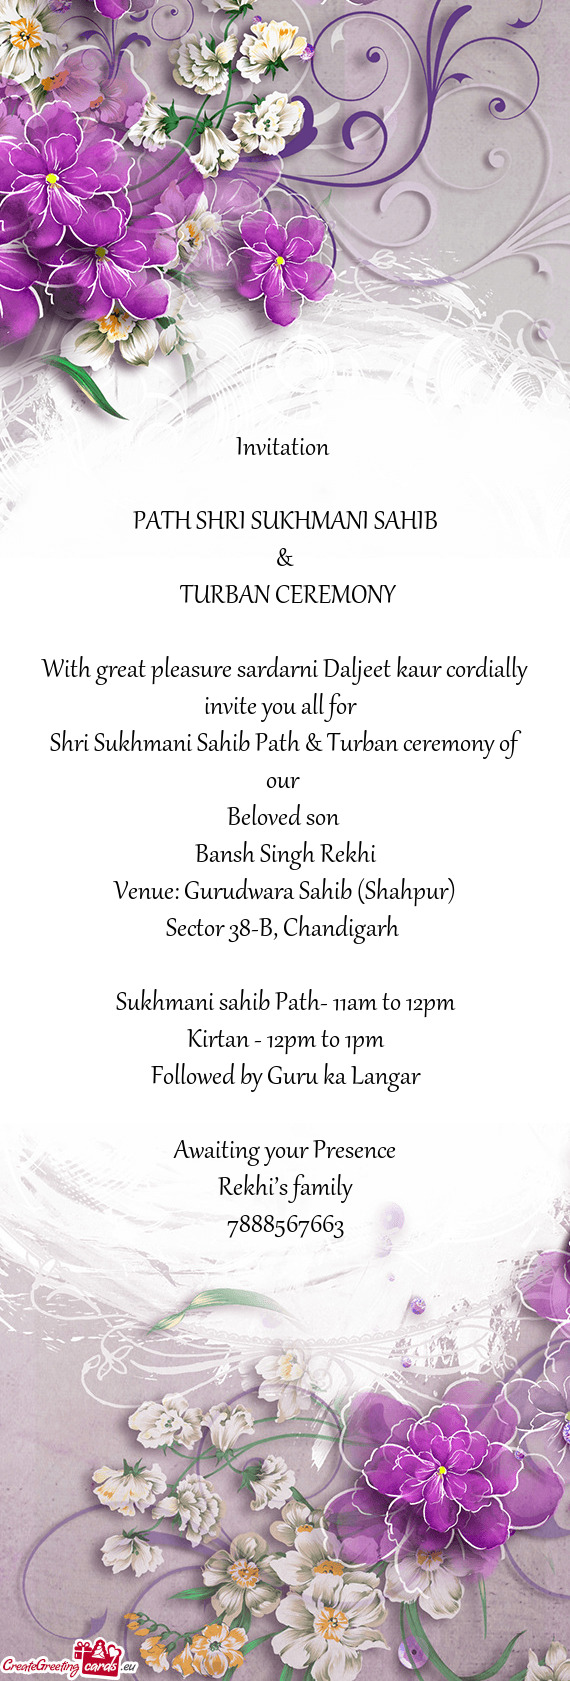 With great pleasure sardarni Daljeet kaur cordially invite you all for